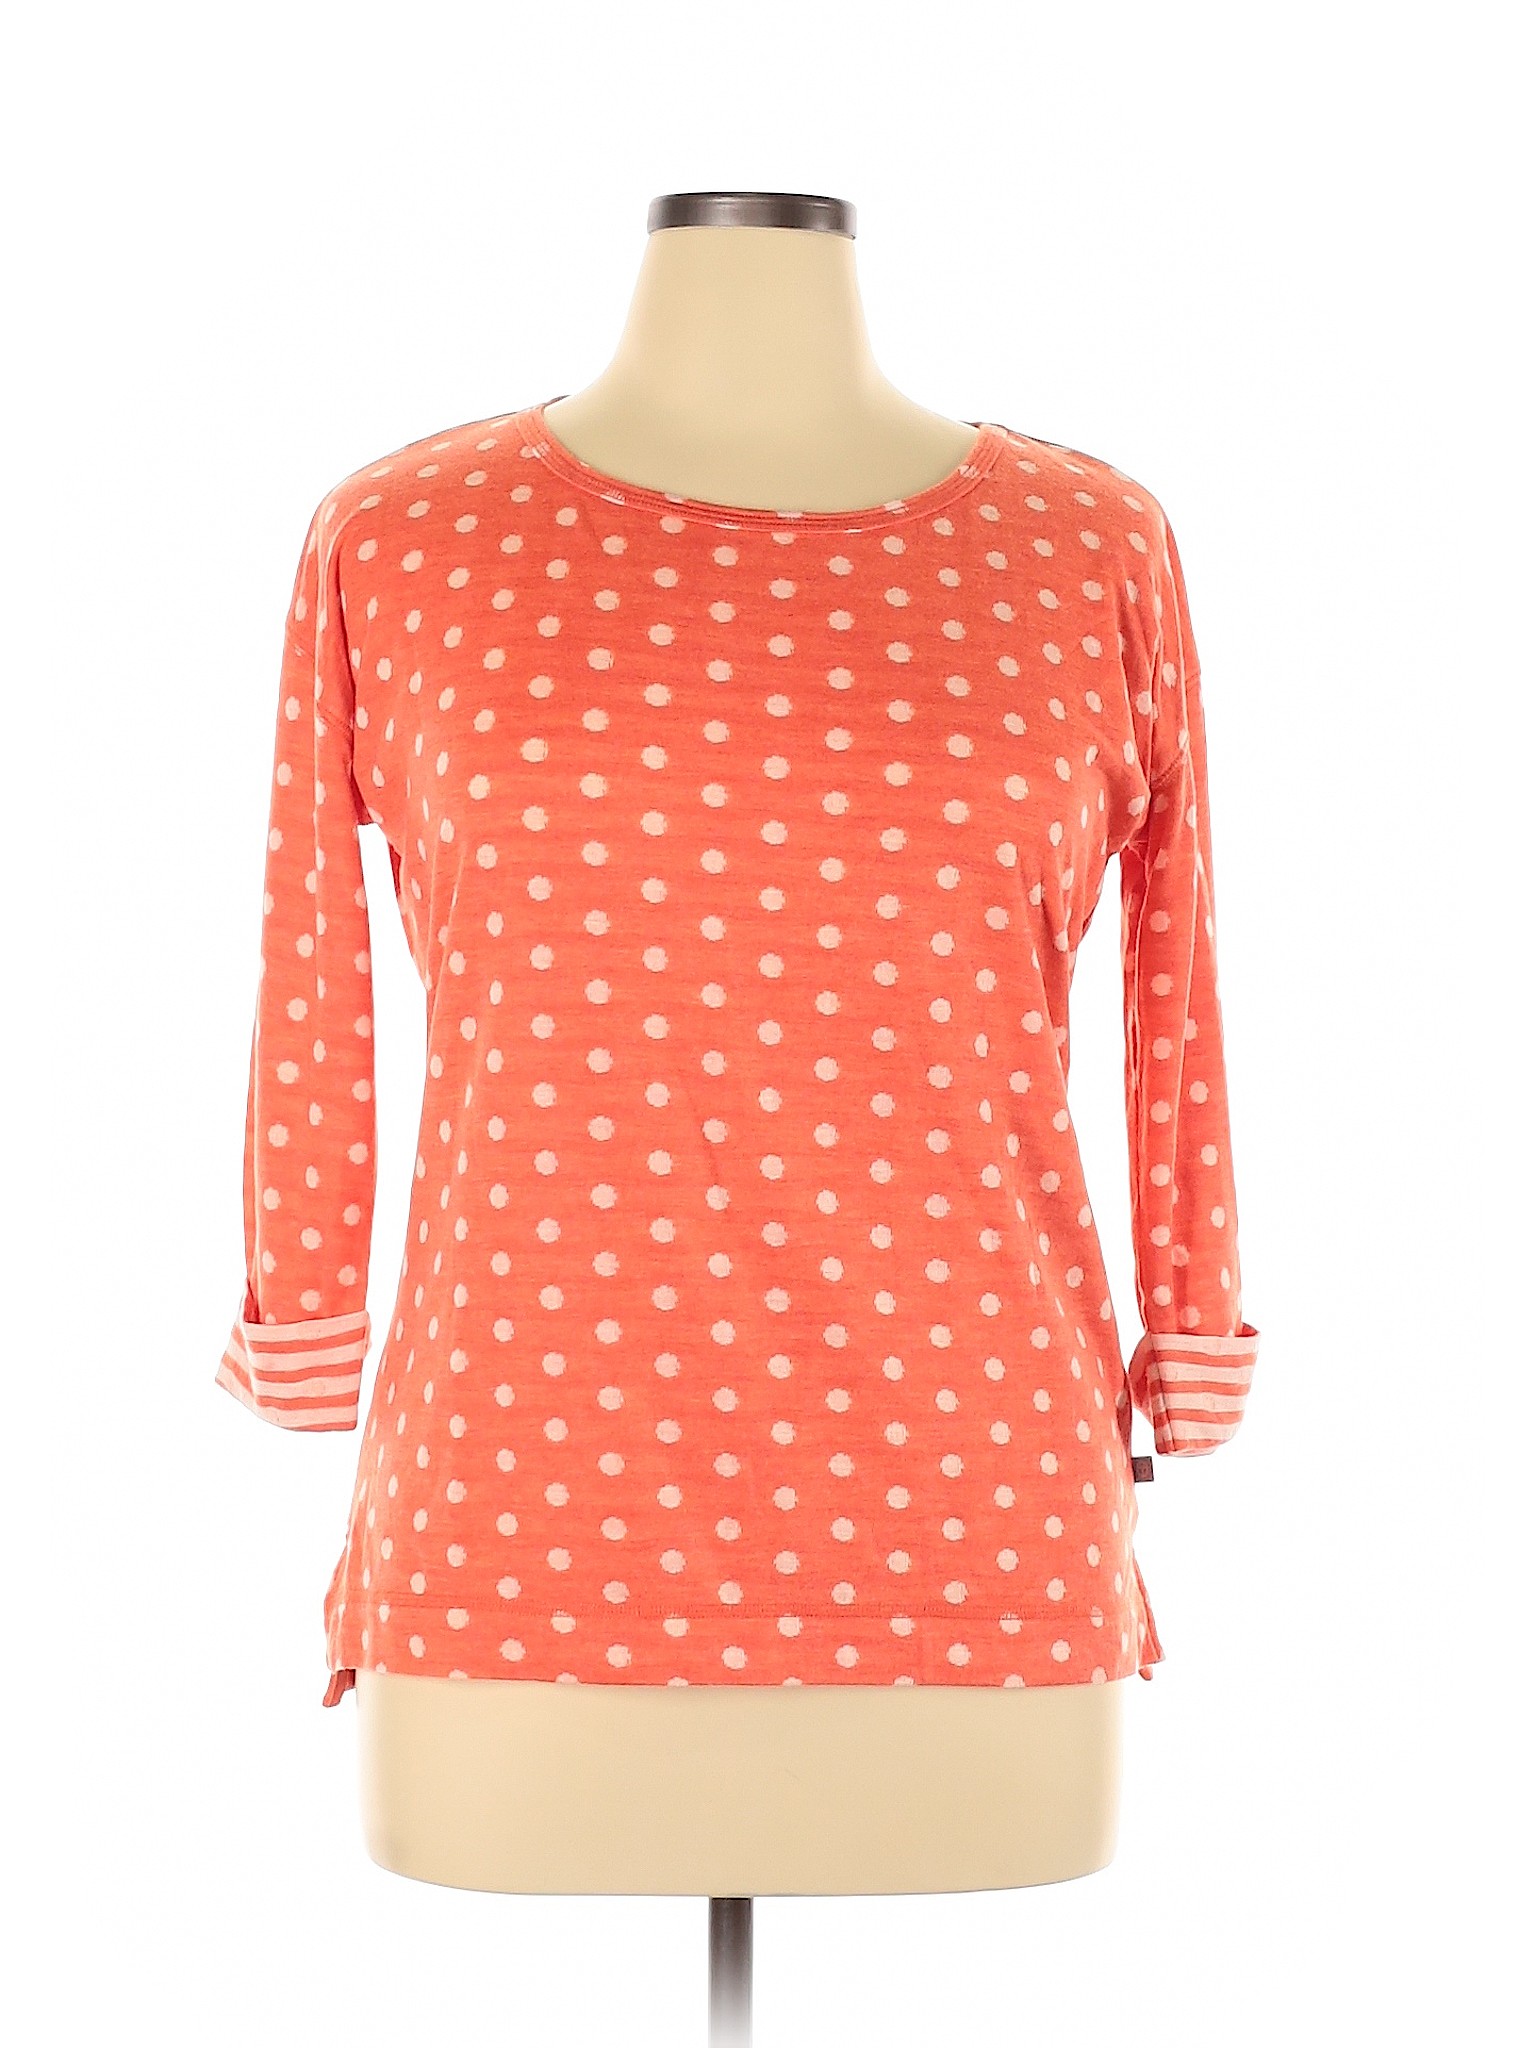 T by Talbots Women Orange Pullover Sweater M | eBay